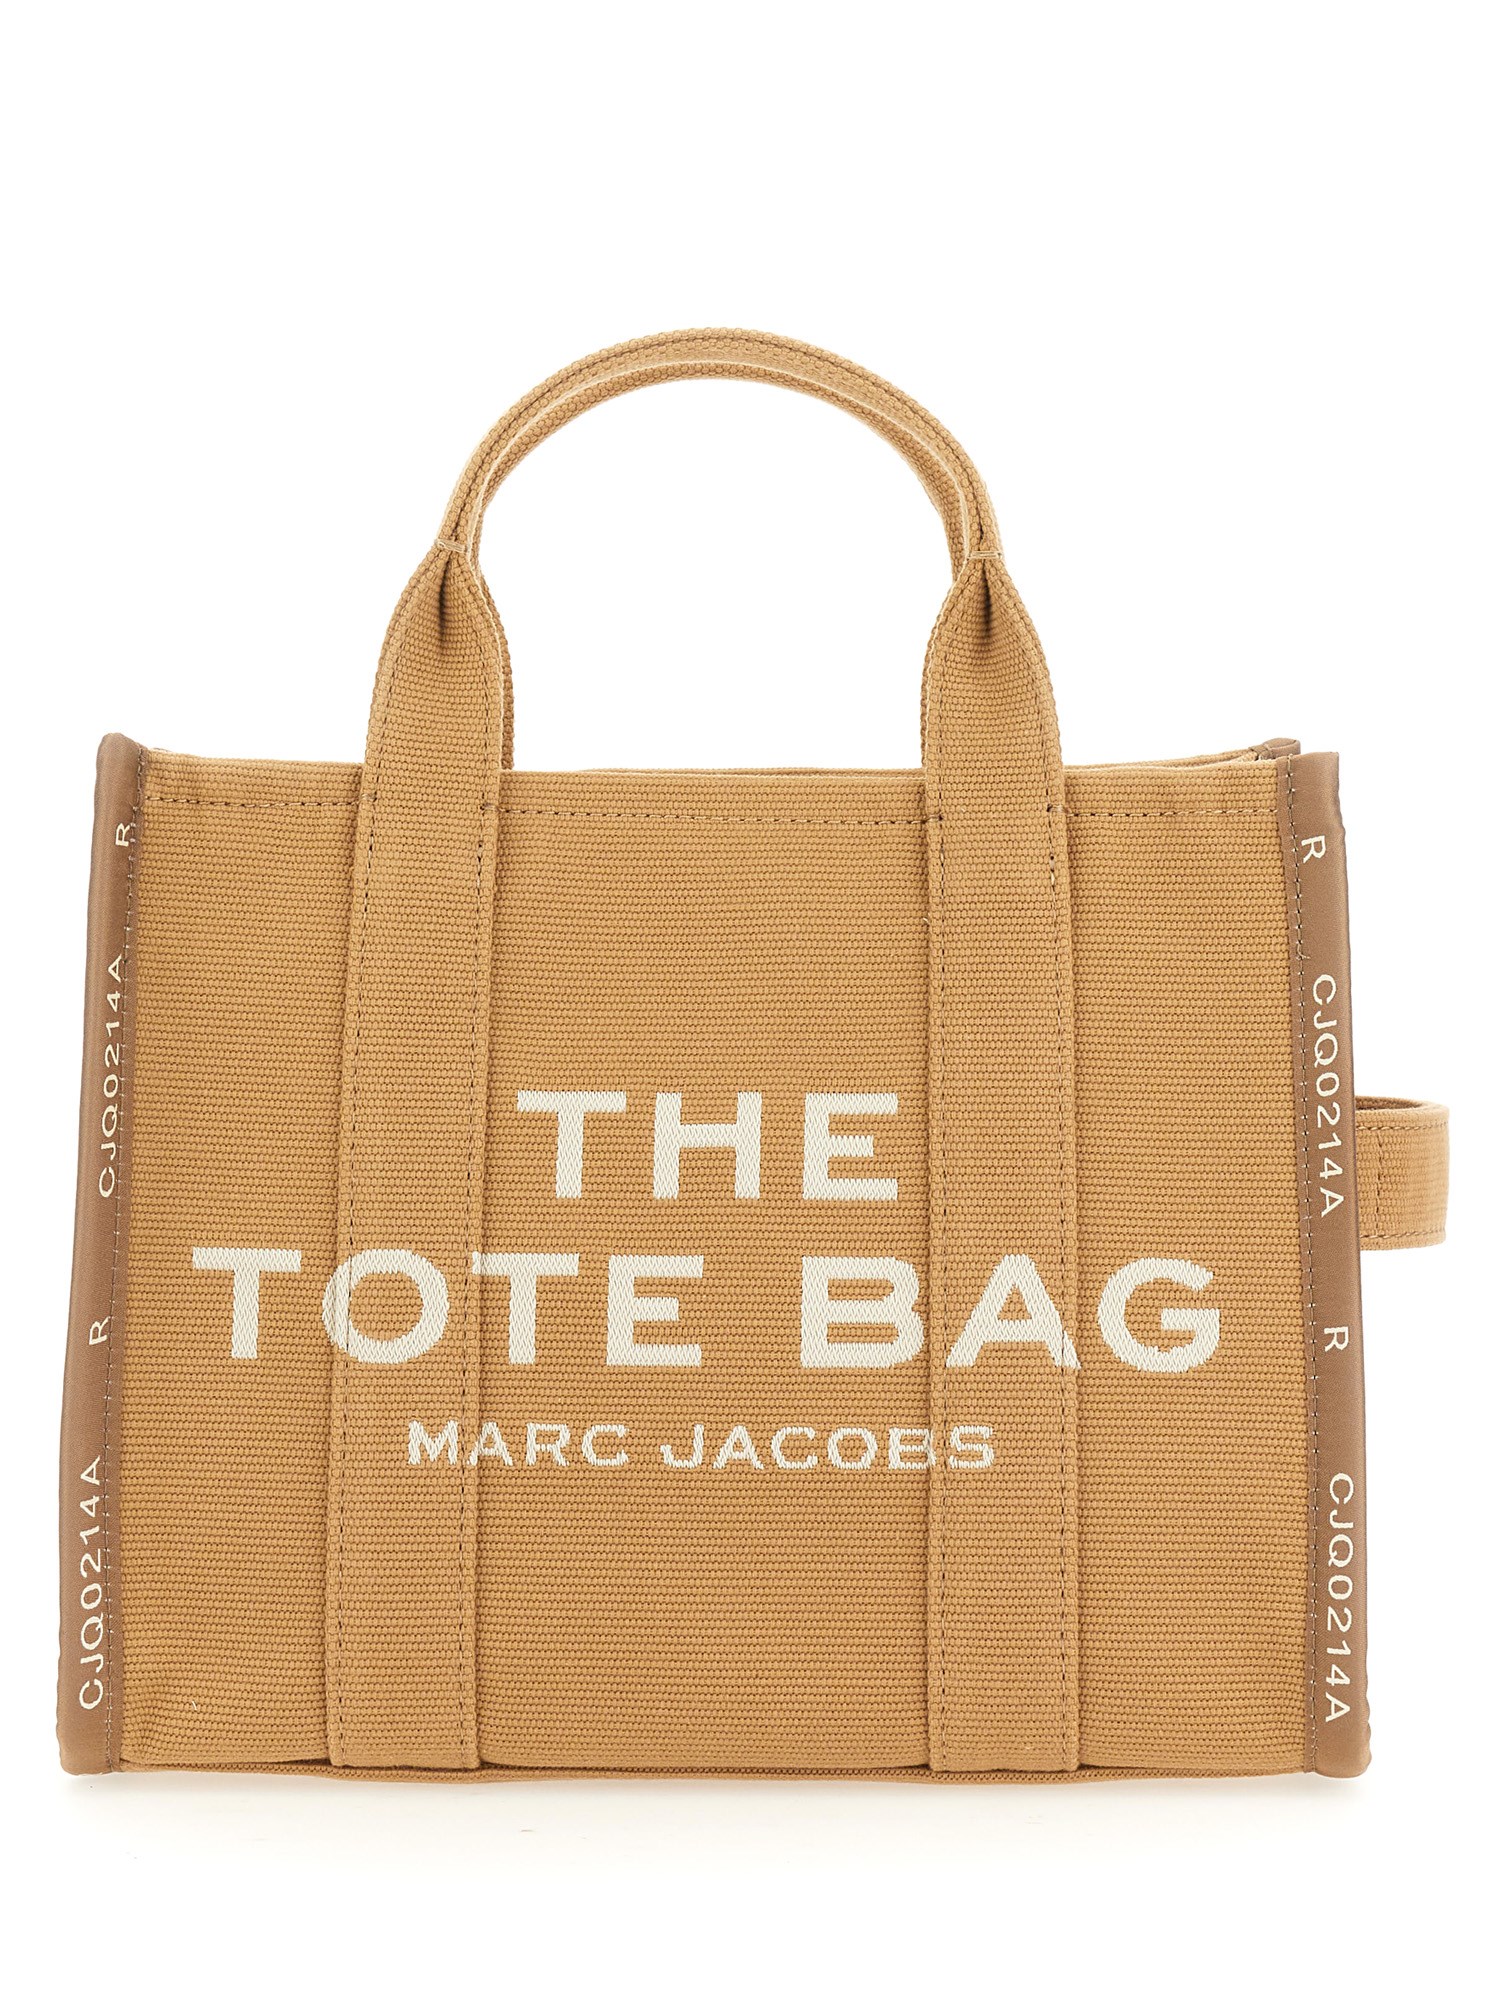 Marc Jacobs marc jacobs the tote medium bag